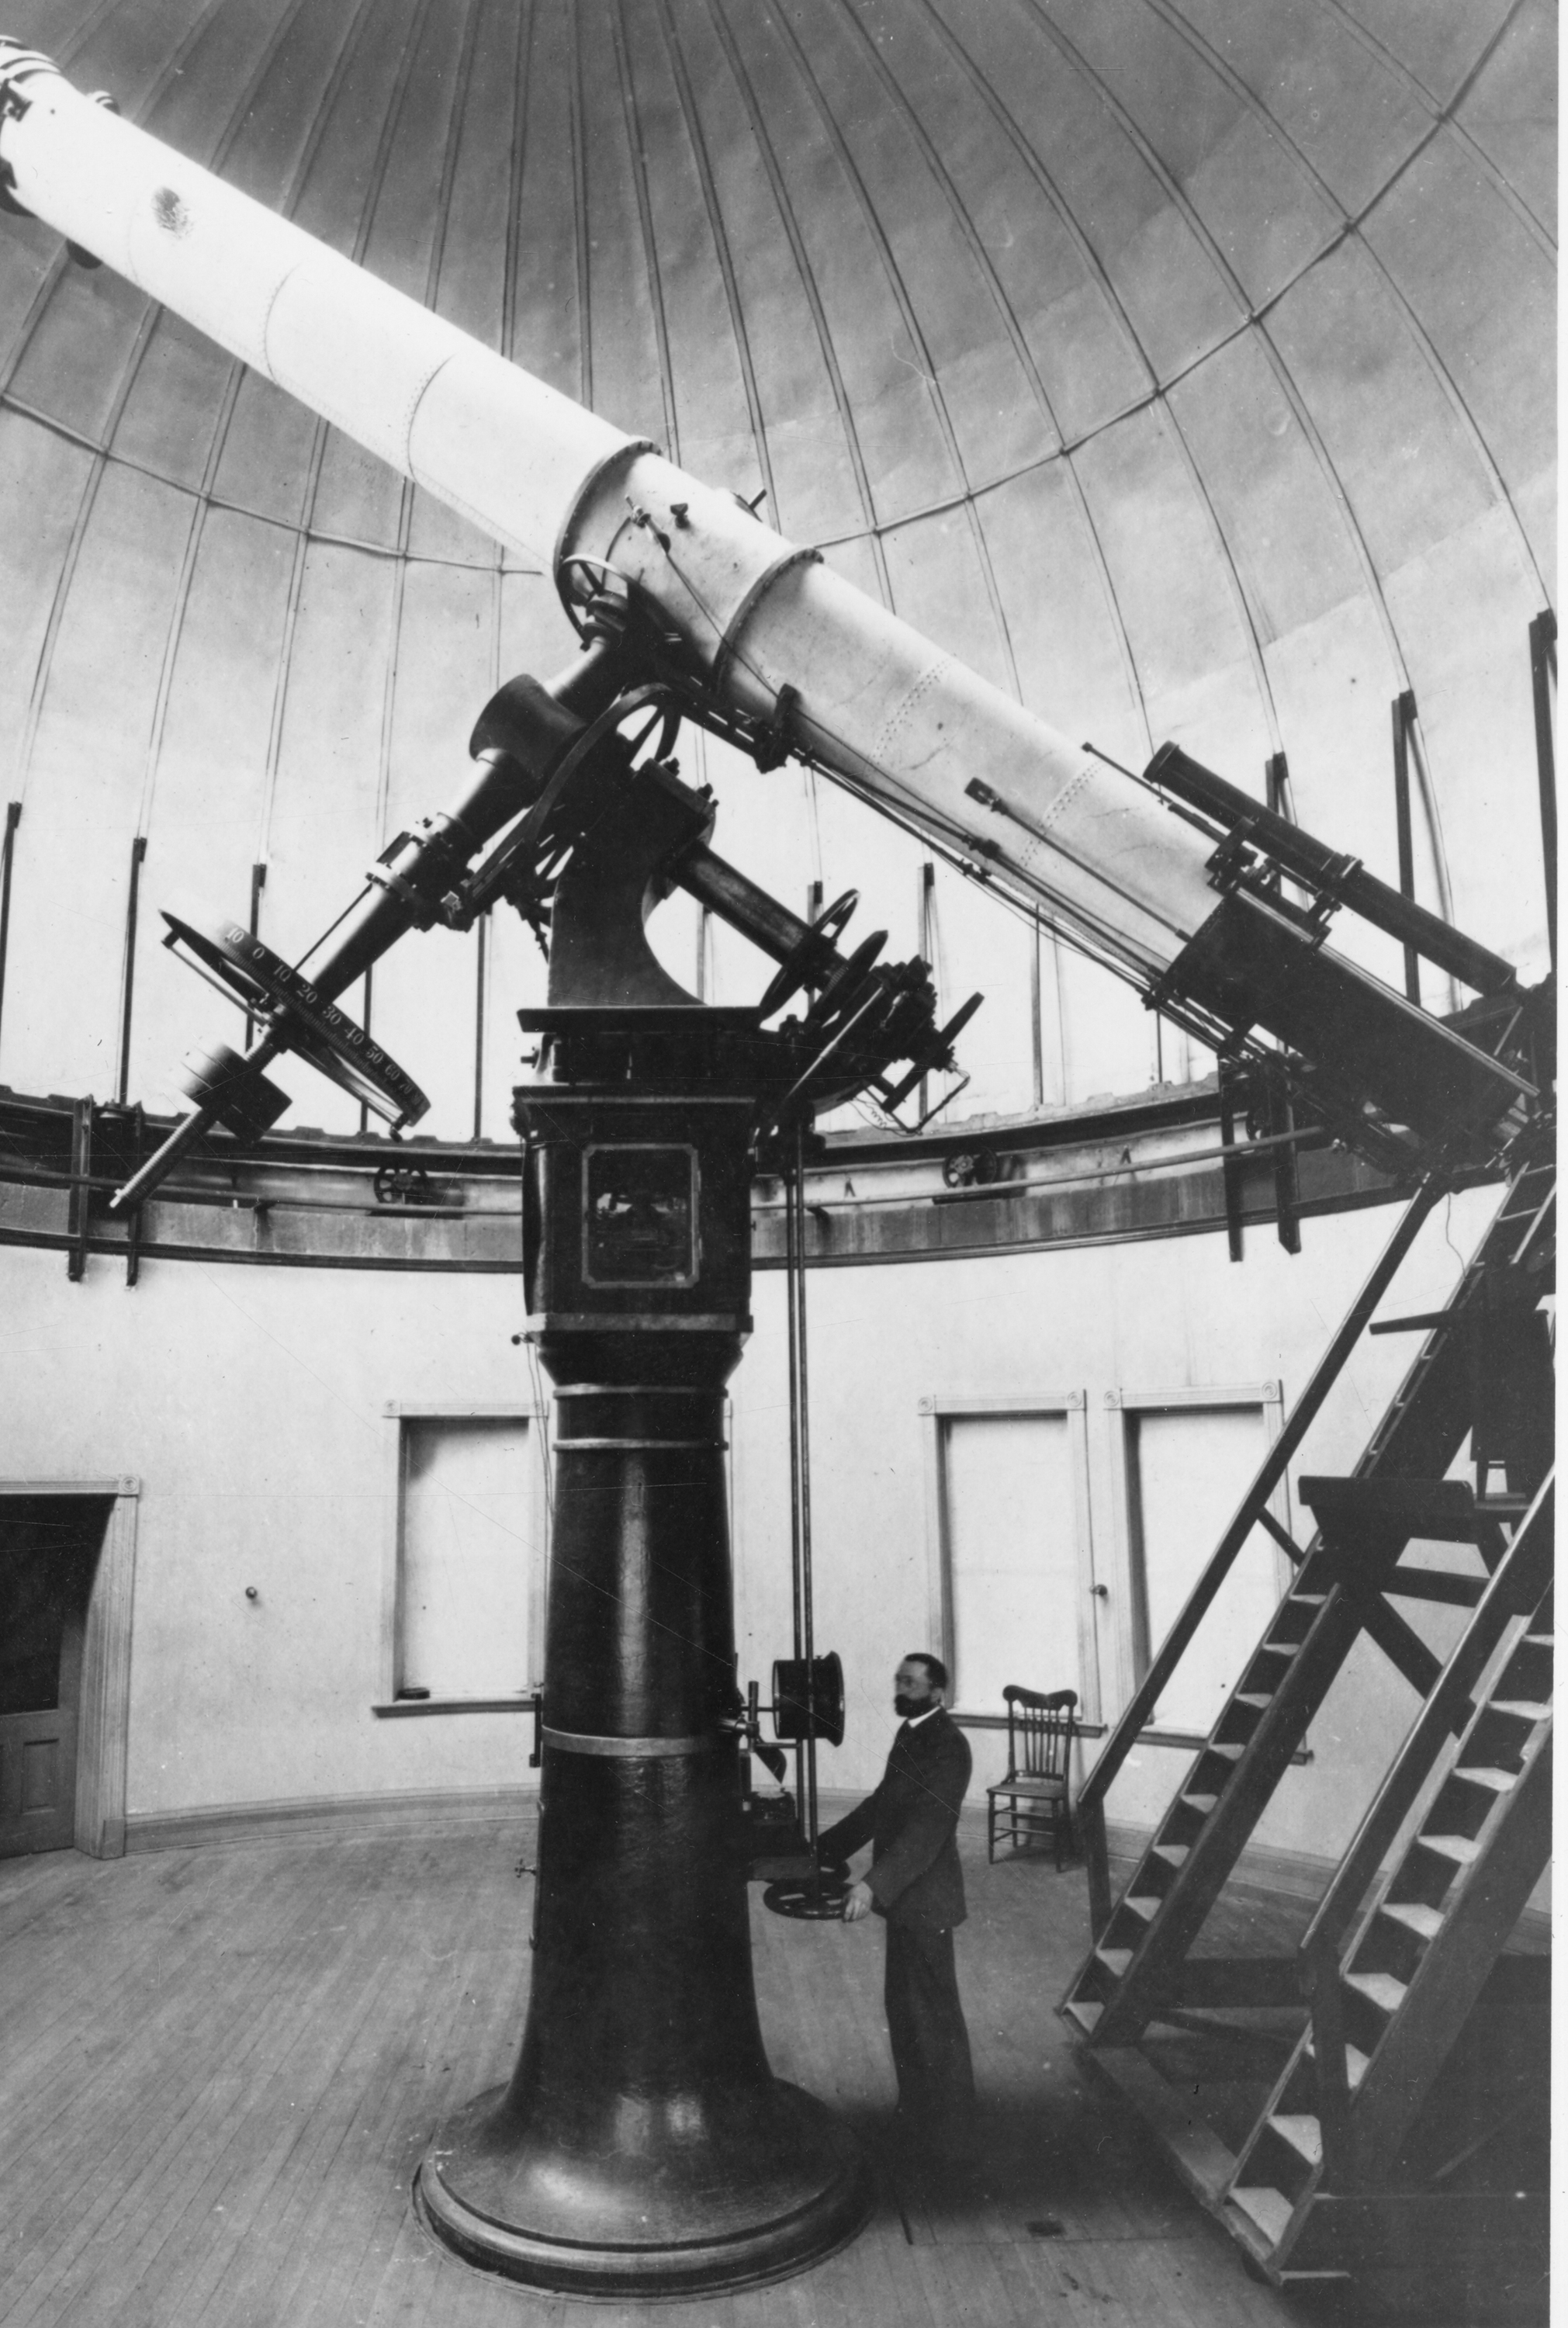 Chamberlin Observatory in Denver, Colorado